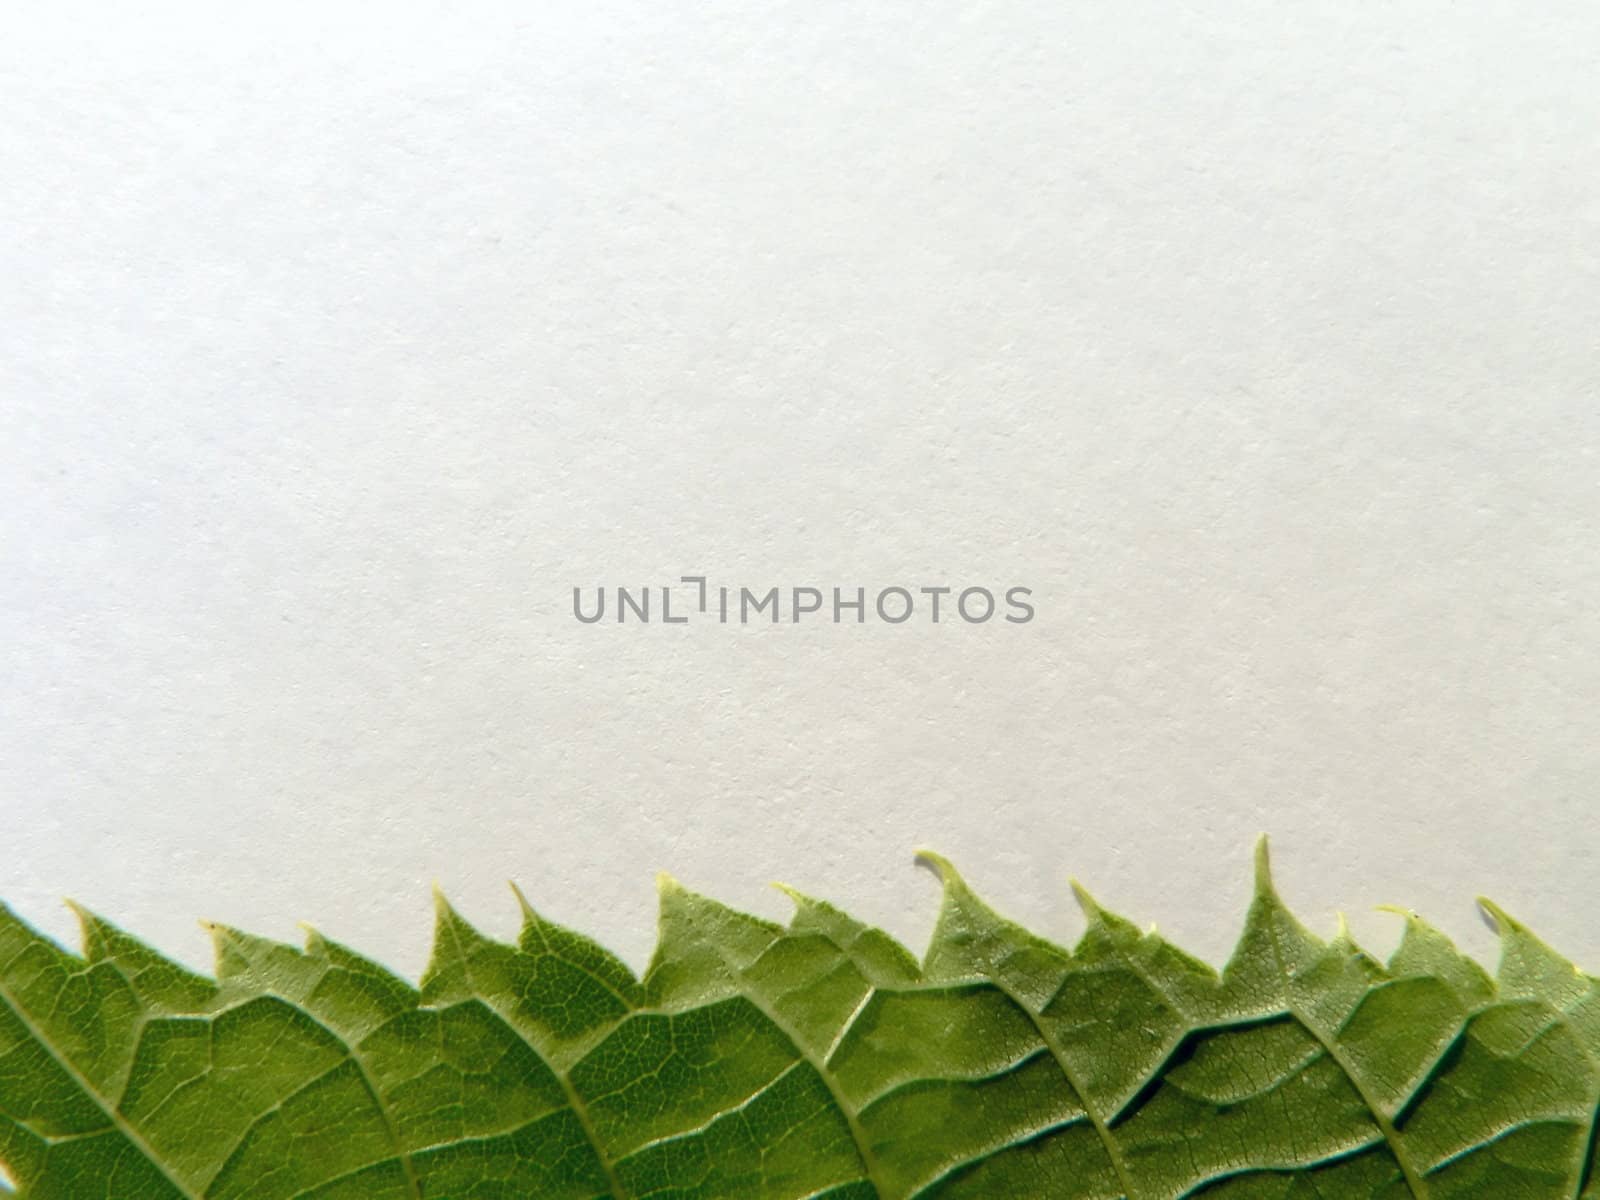 Edge of the leaf by ichip